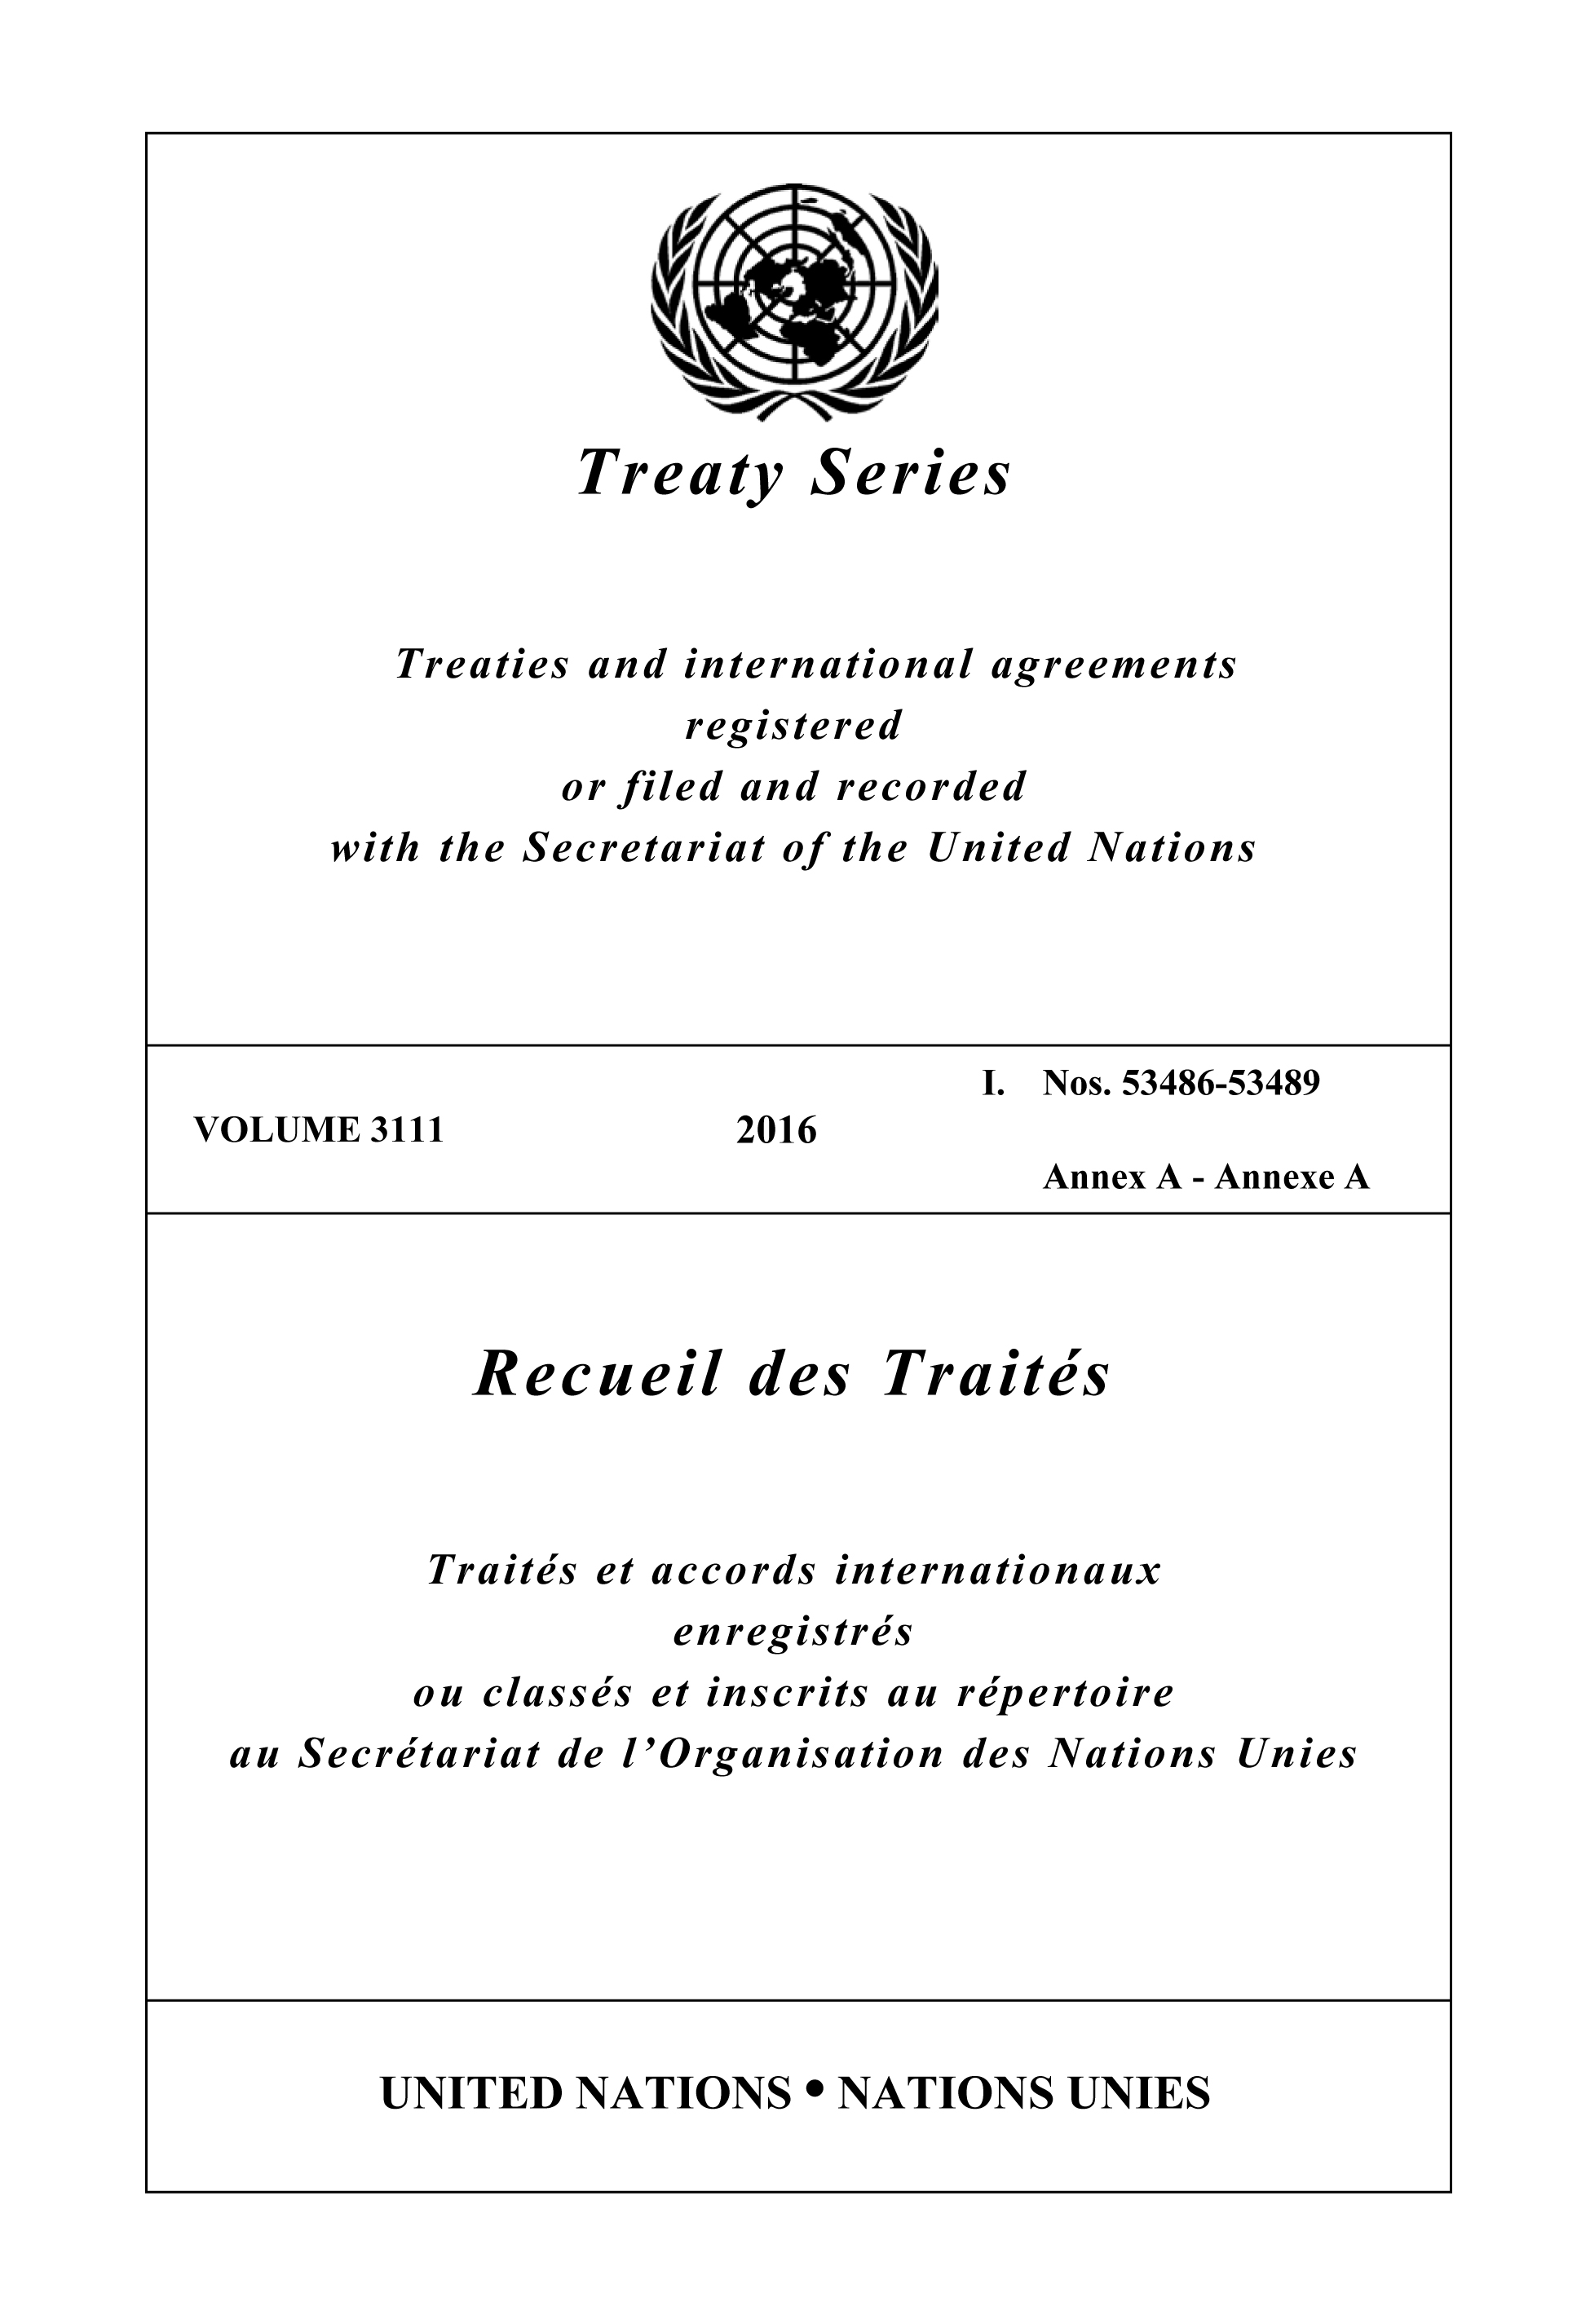 image of Treaty Series 3111